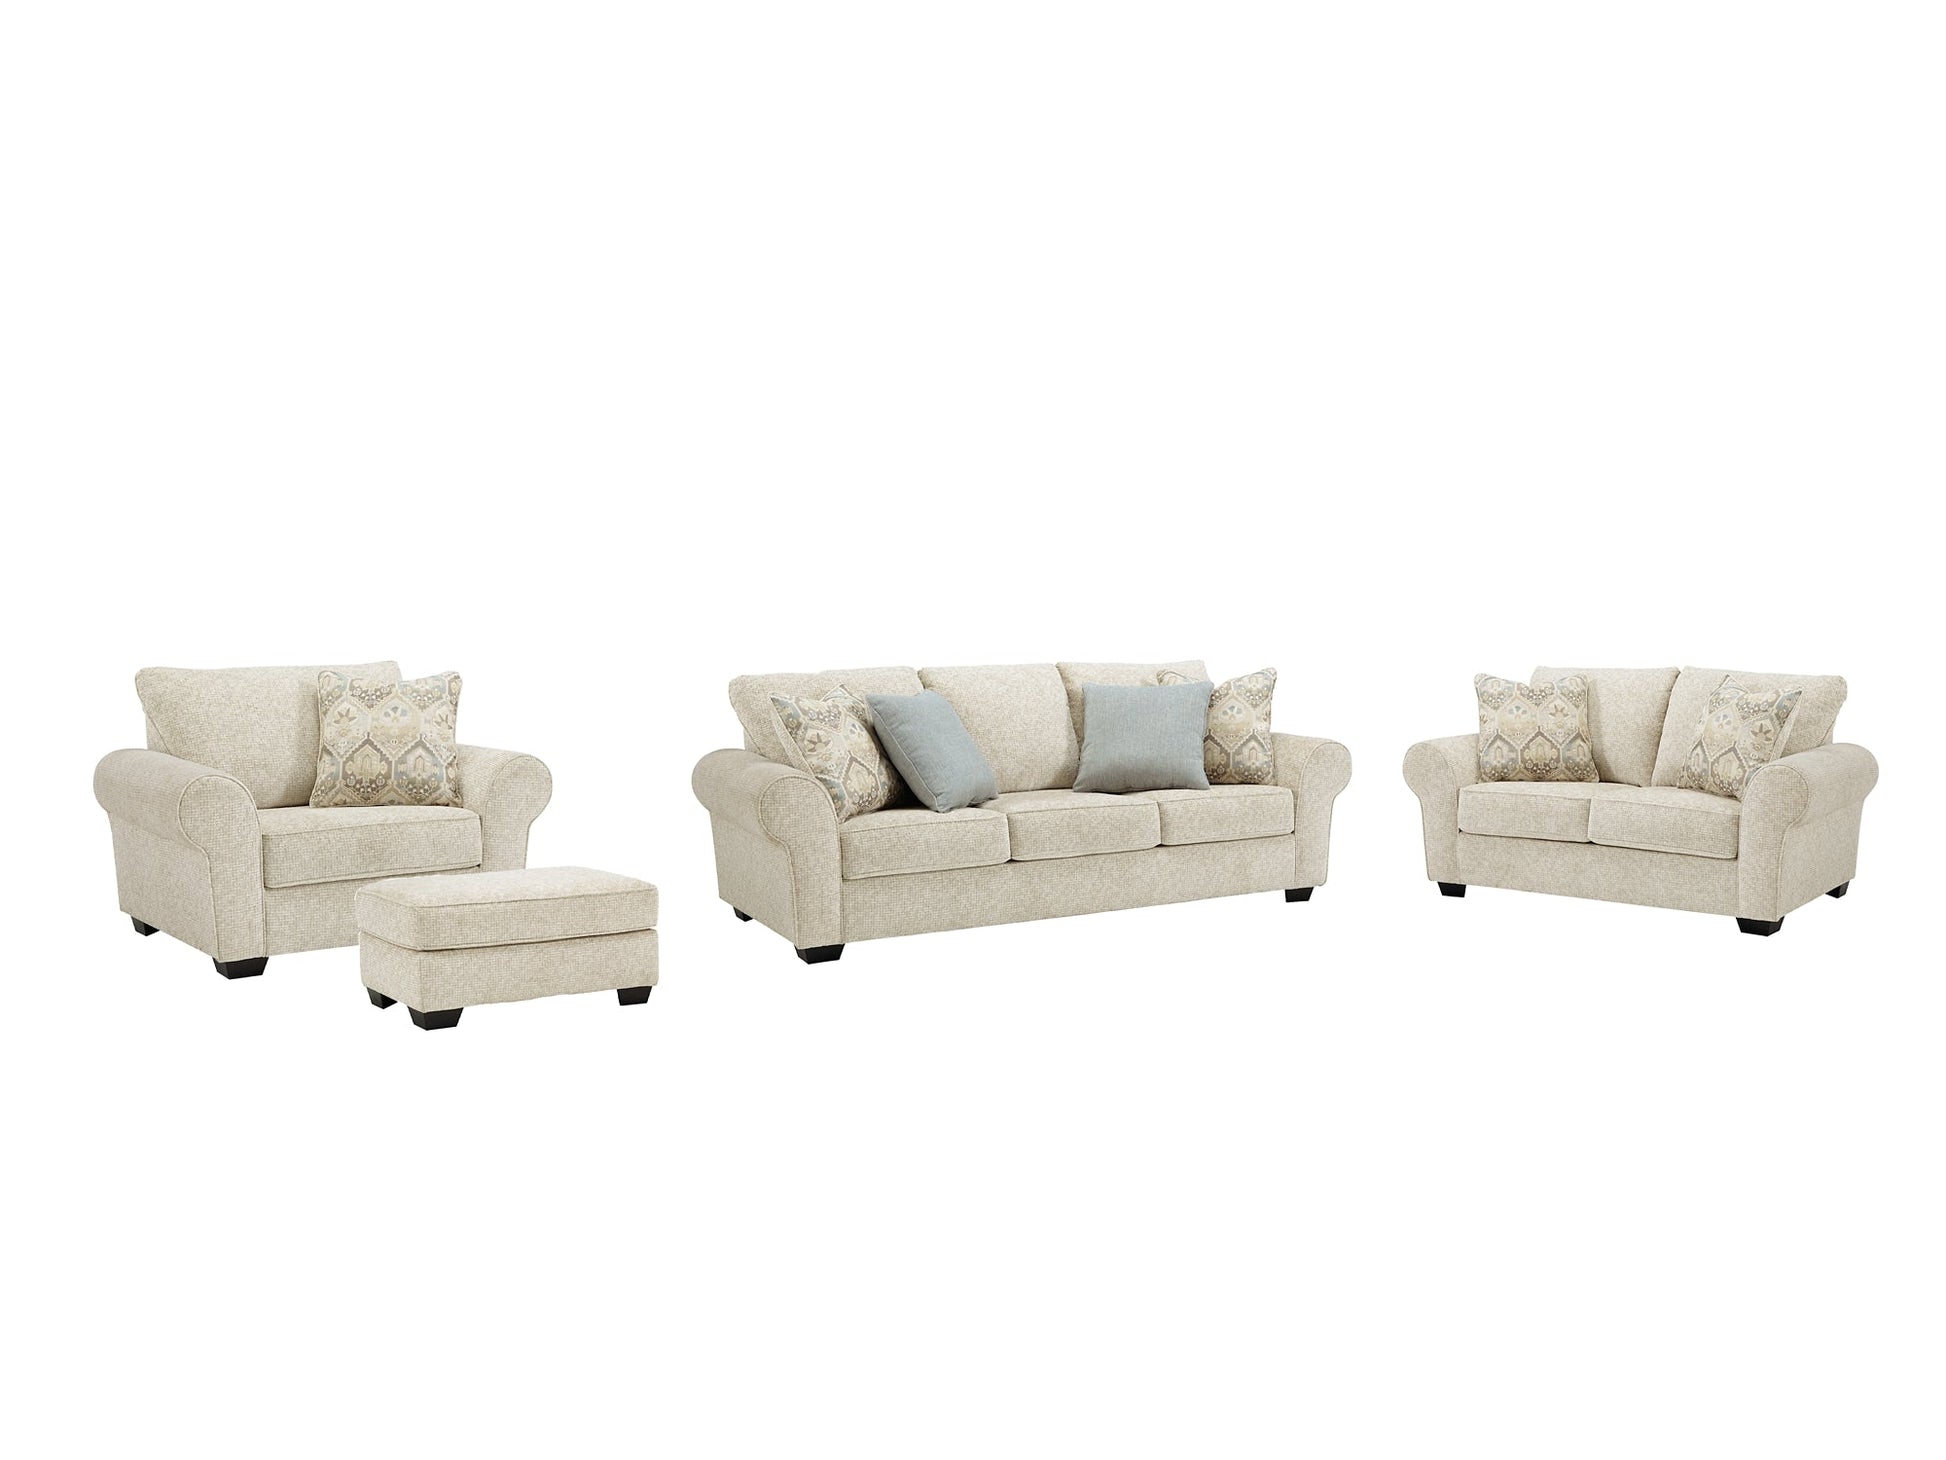 Haisley Sofa, Loveseat, Chair and Ottoman at Cloud 9 Mattress & Furniture furniture, home furnishing, home decor